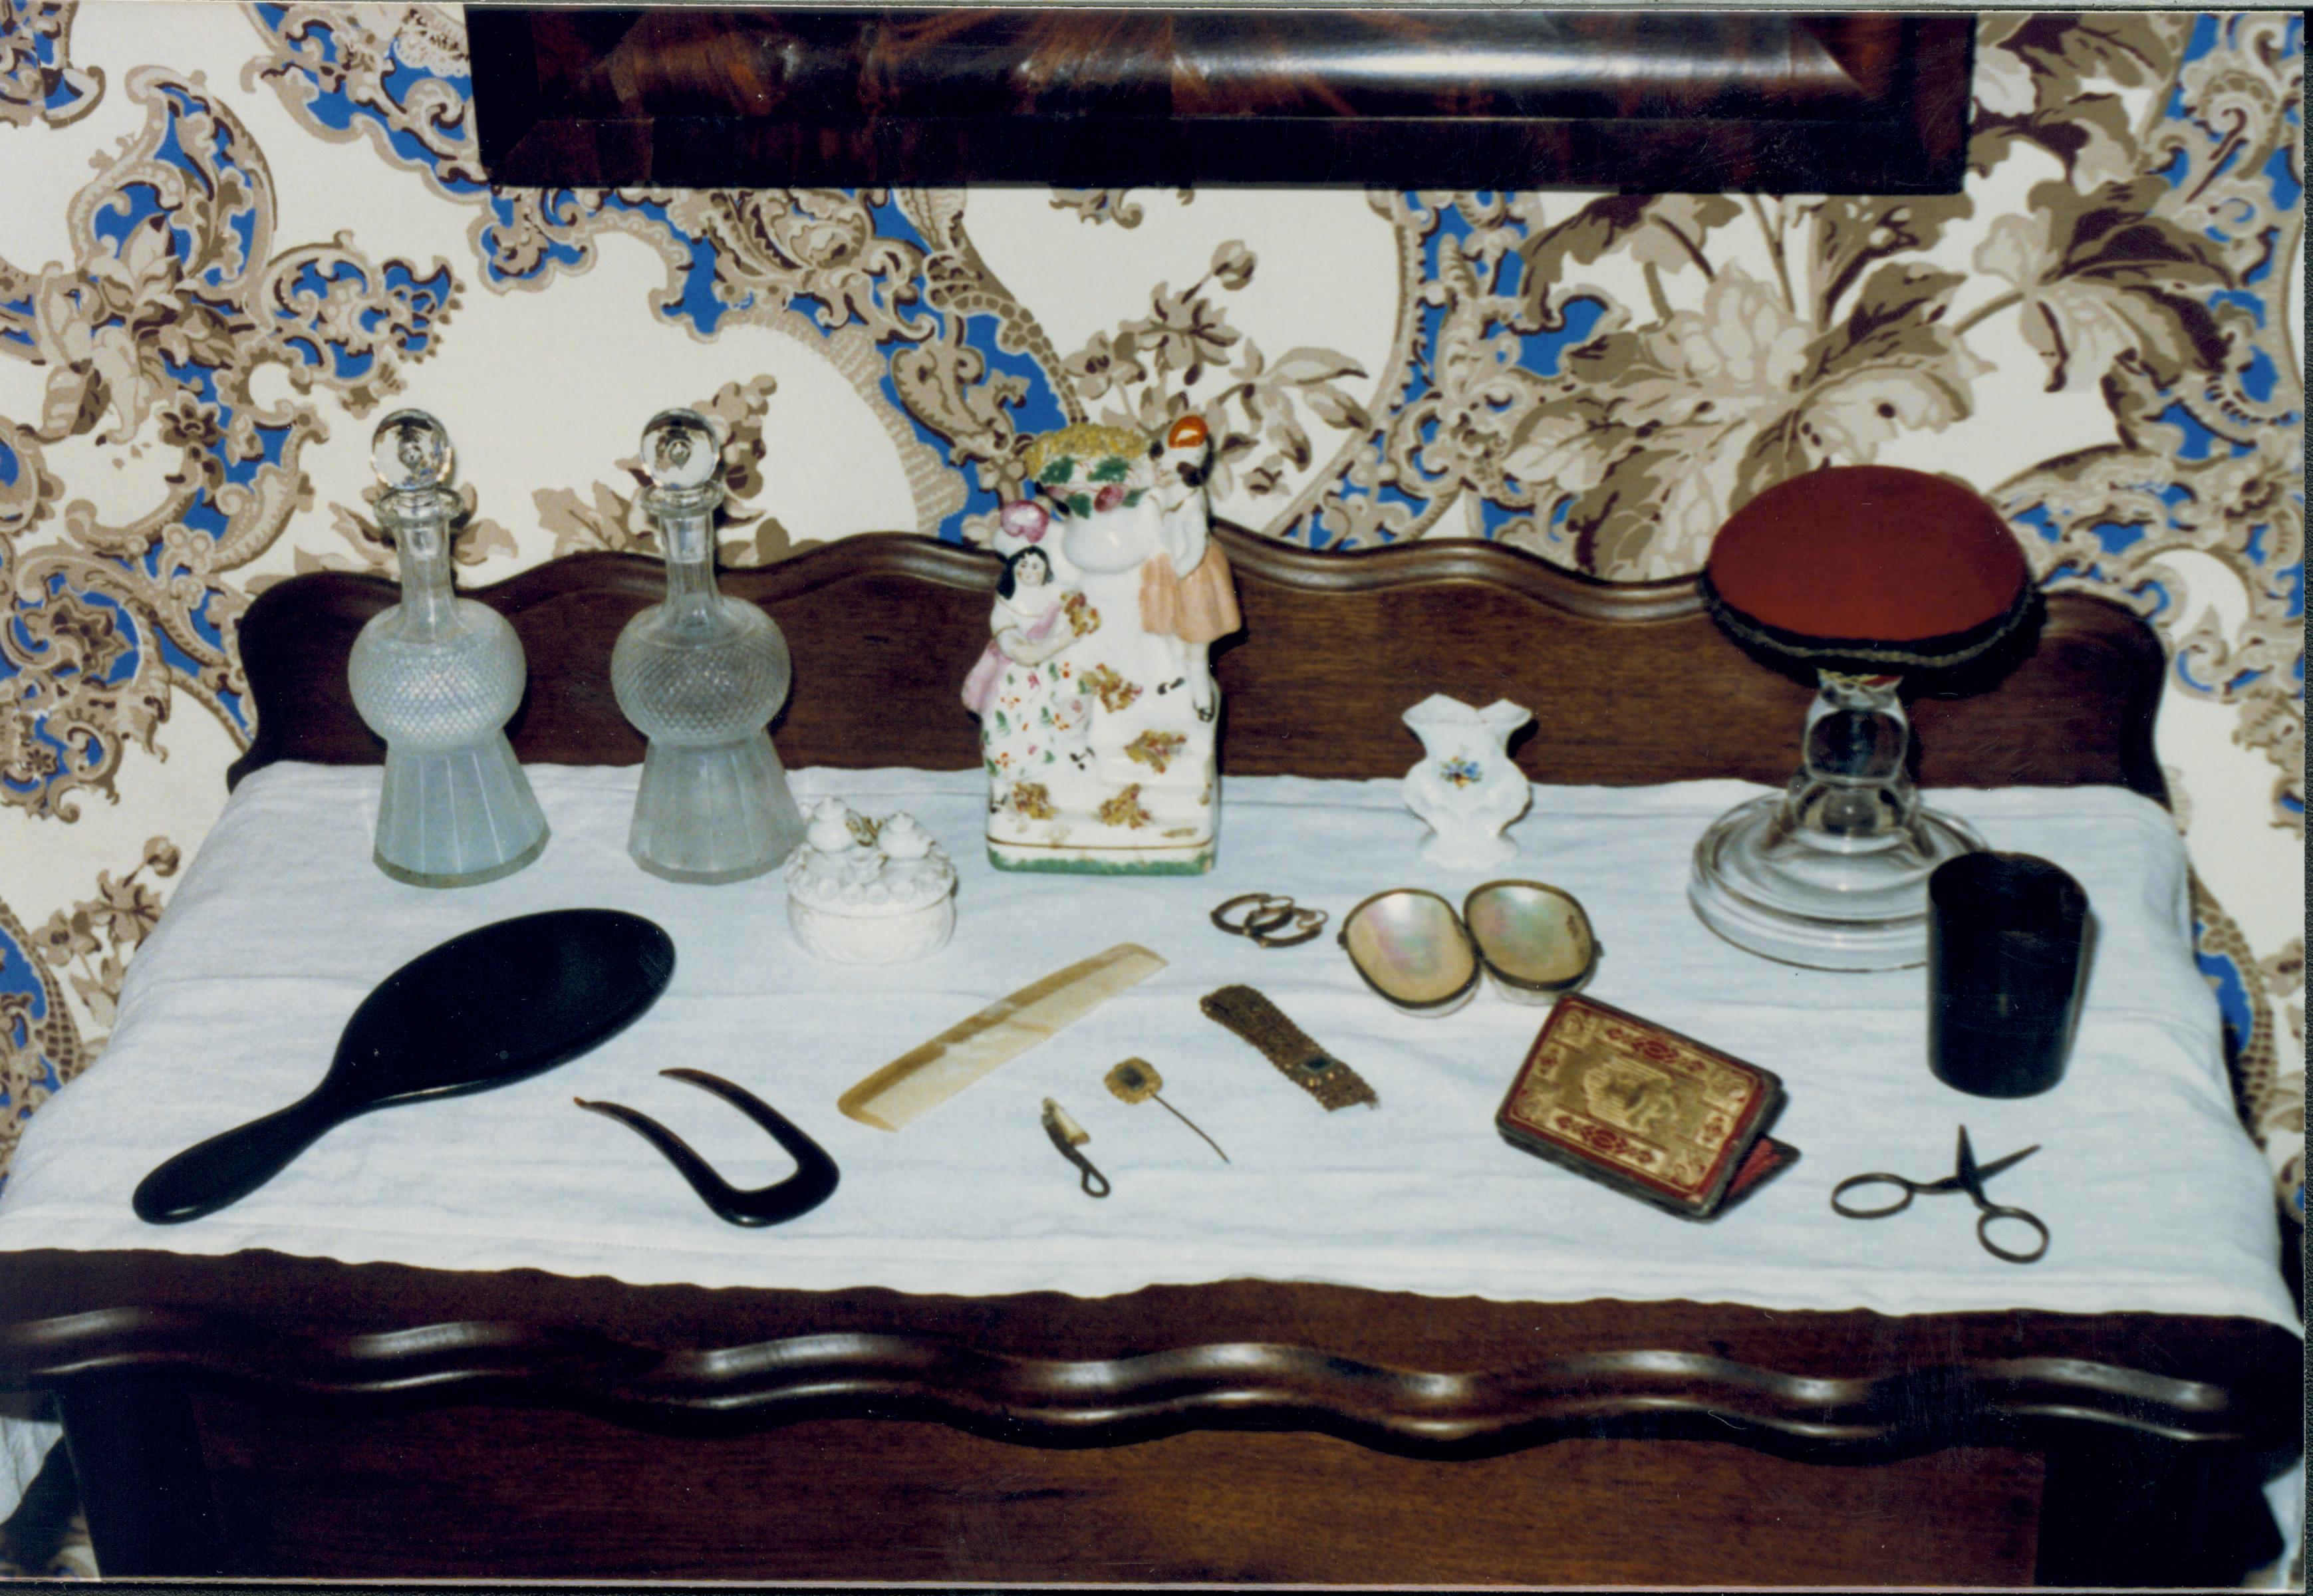 Mary's bedroom Mary's Bedroom, tablecloth, mirror, perfume, combs, scissors